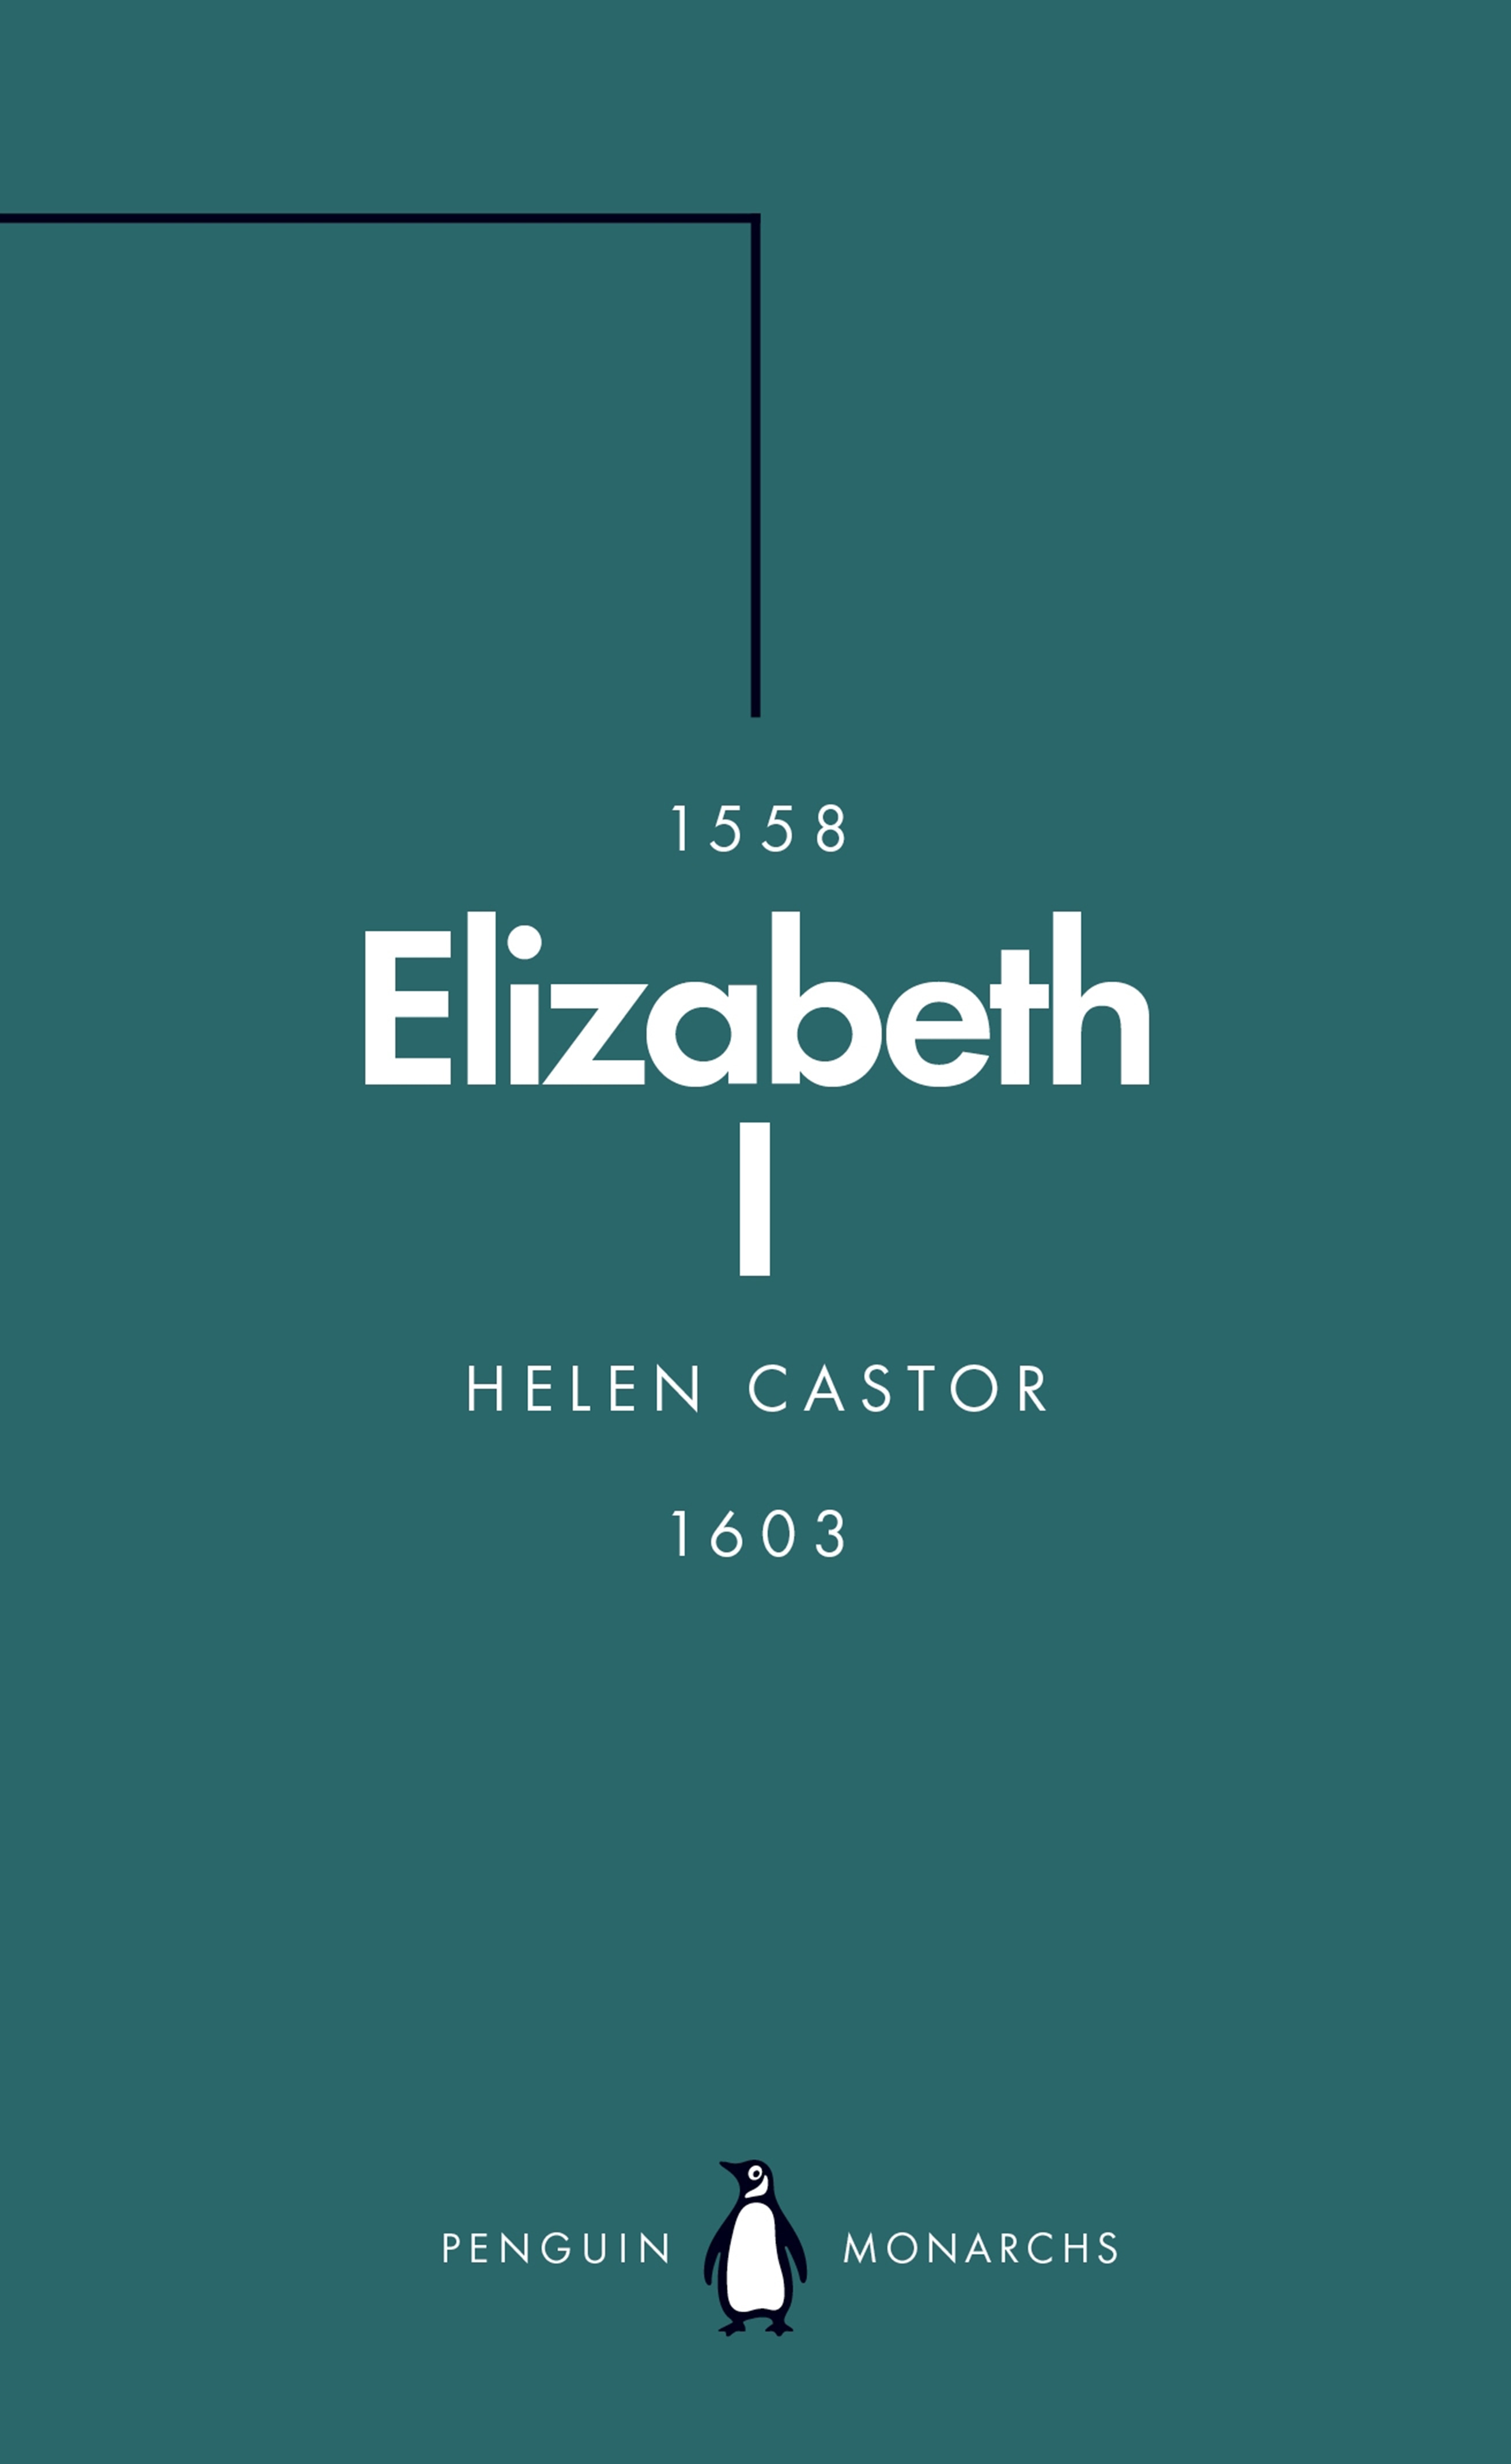 Book “Elizabeth I (Penguin Monarchs)” by Helen Castor — July 4, 2019